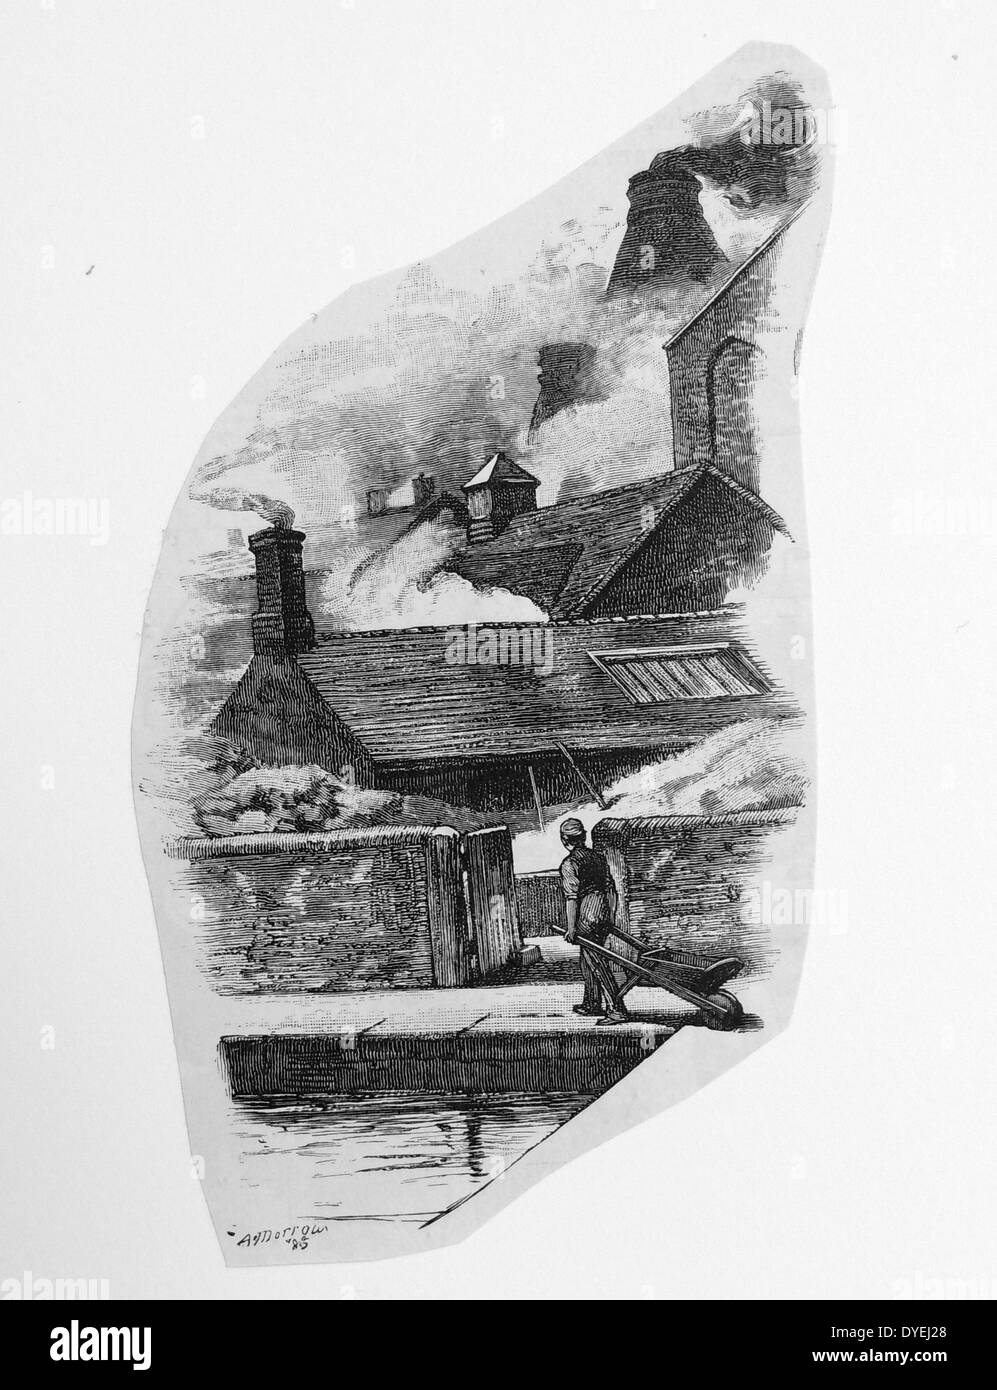 Unter den Öfen, Stoke-on-Trent (die Töpfereien), Staffordshire, England. Gravur, London, 1885. Stockfoto